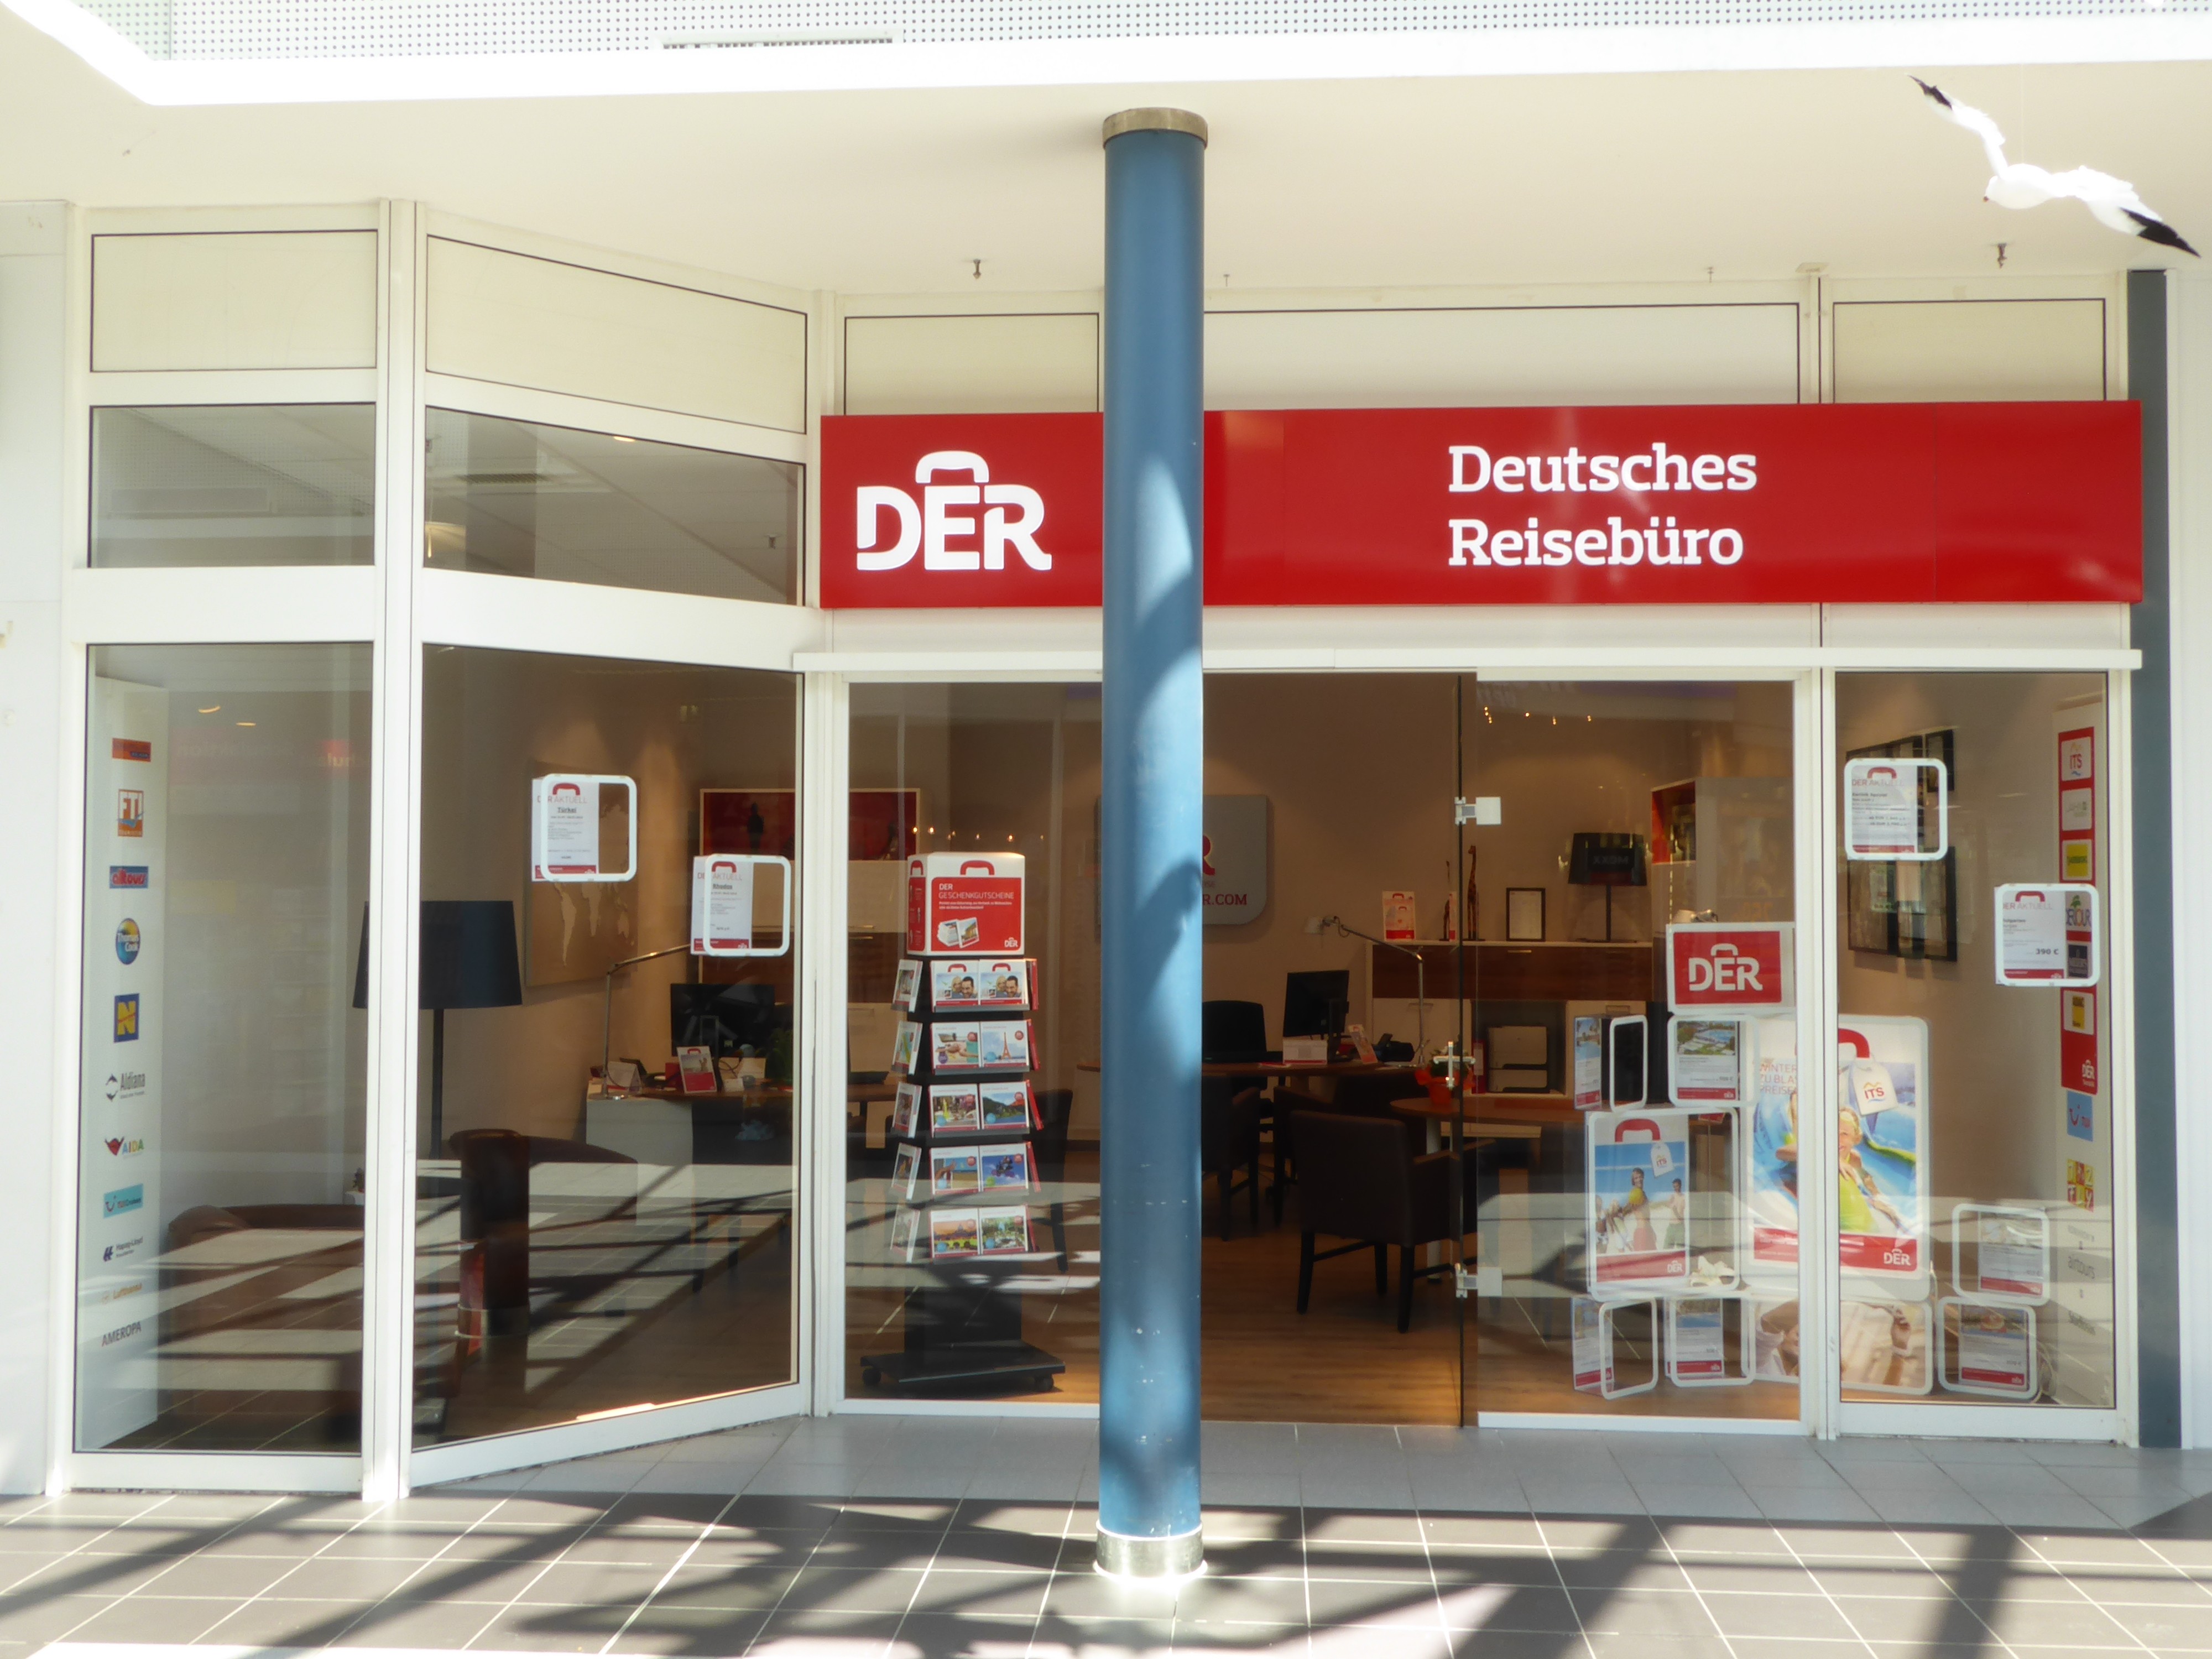 DERTOUR Reisebüro, Enderstraße 59 in Dresden